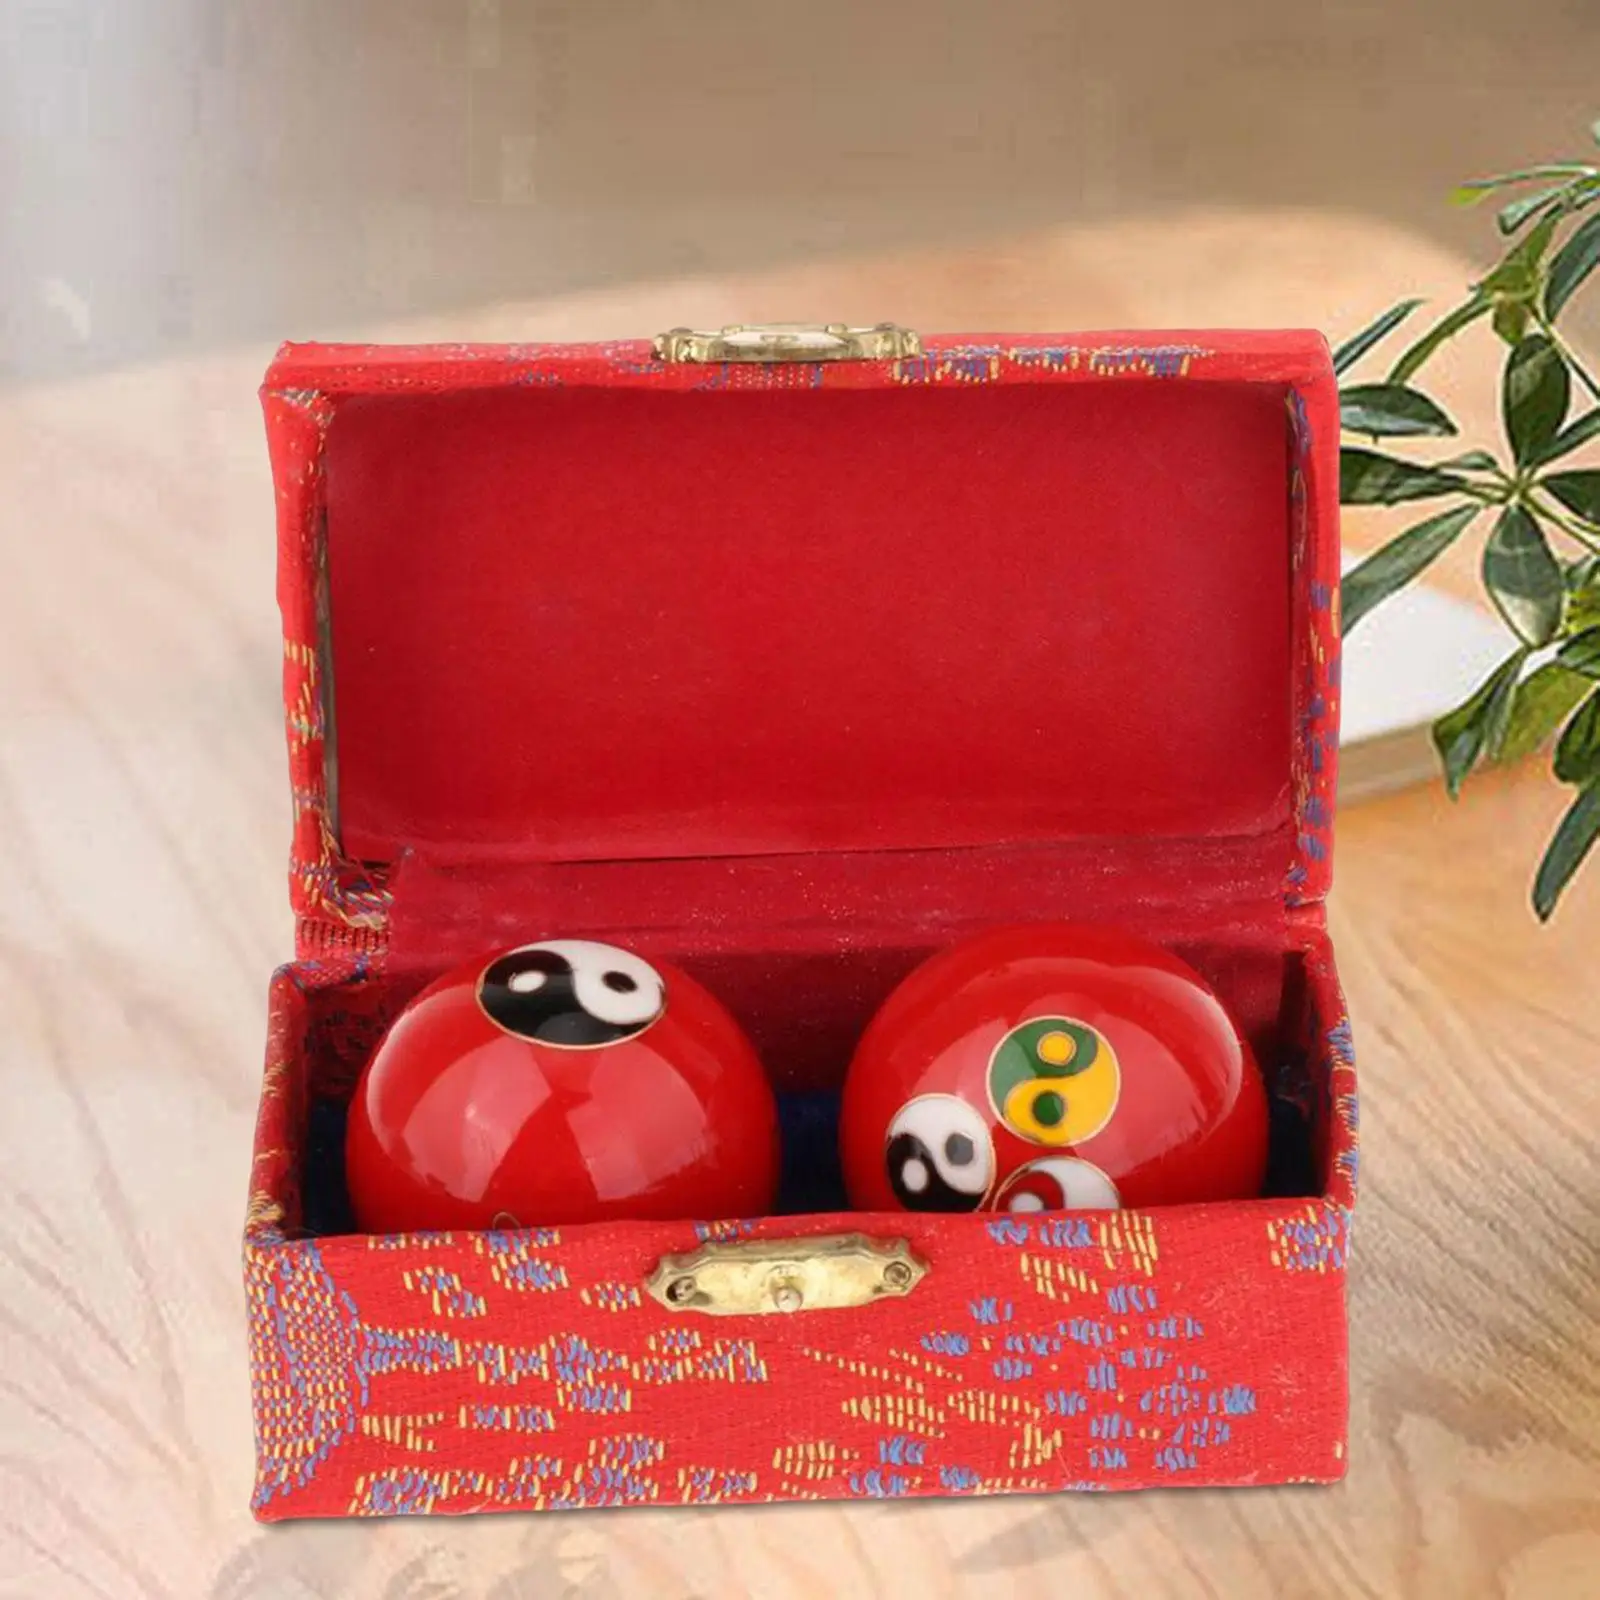 2 Pieces Massage Balls with Storage Box Exerciser Durable Baoding Balls Chinese Exercise Handballs for Parents Elderly Children